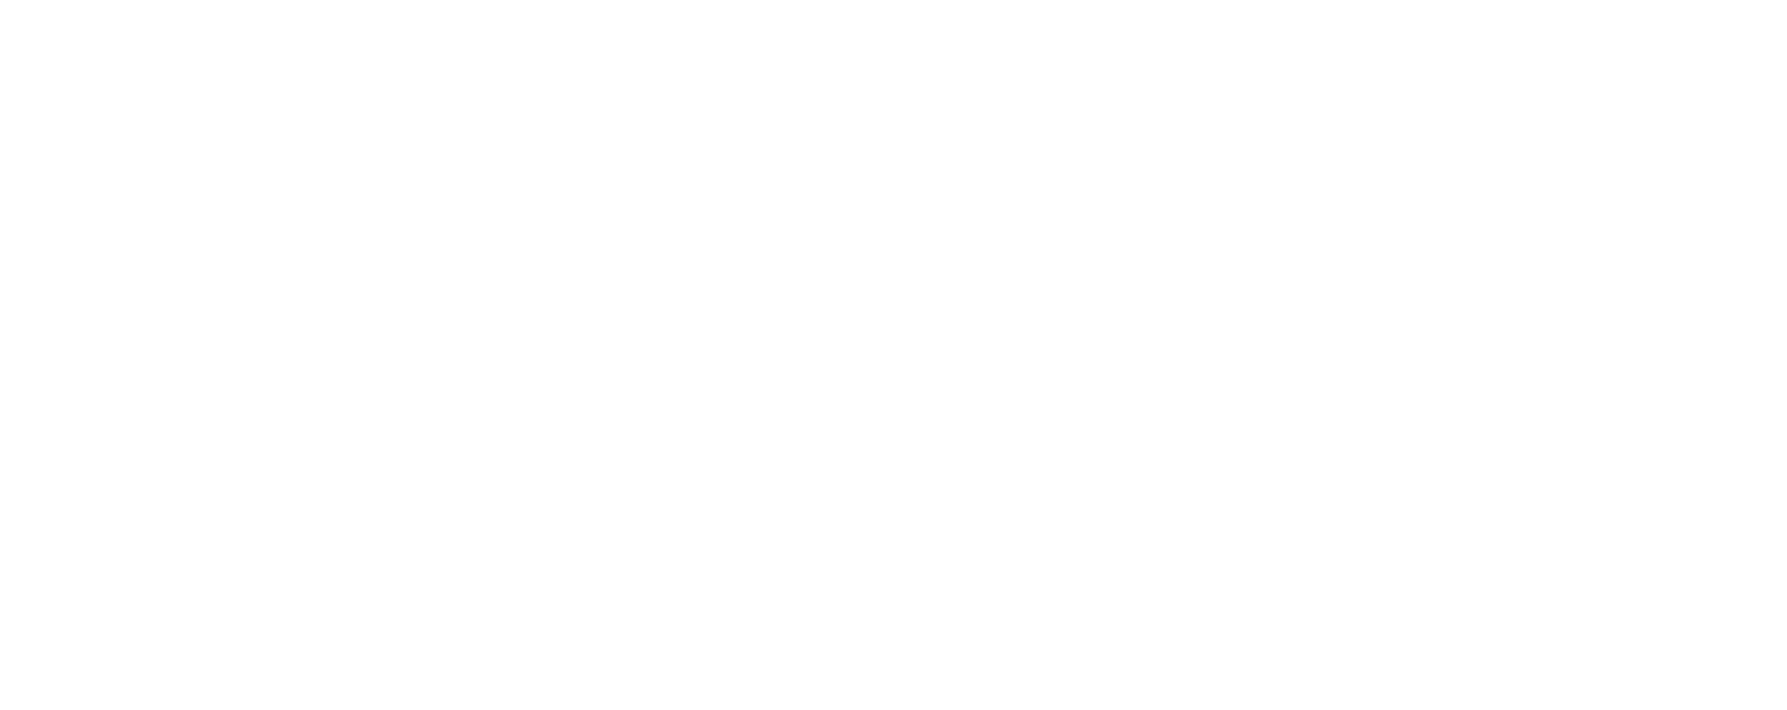 village-green-logo-wht